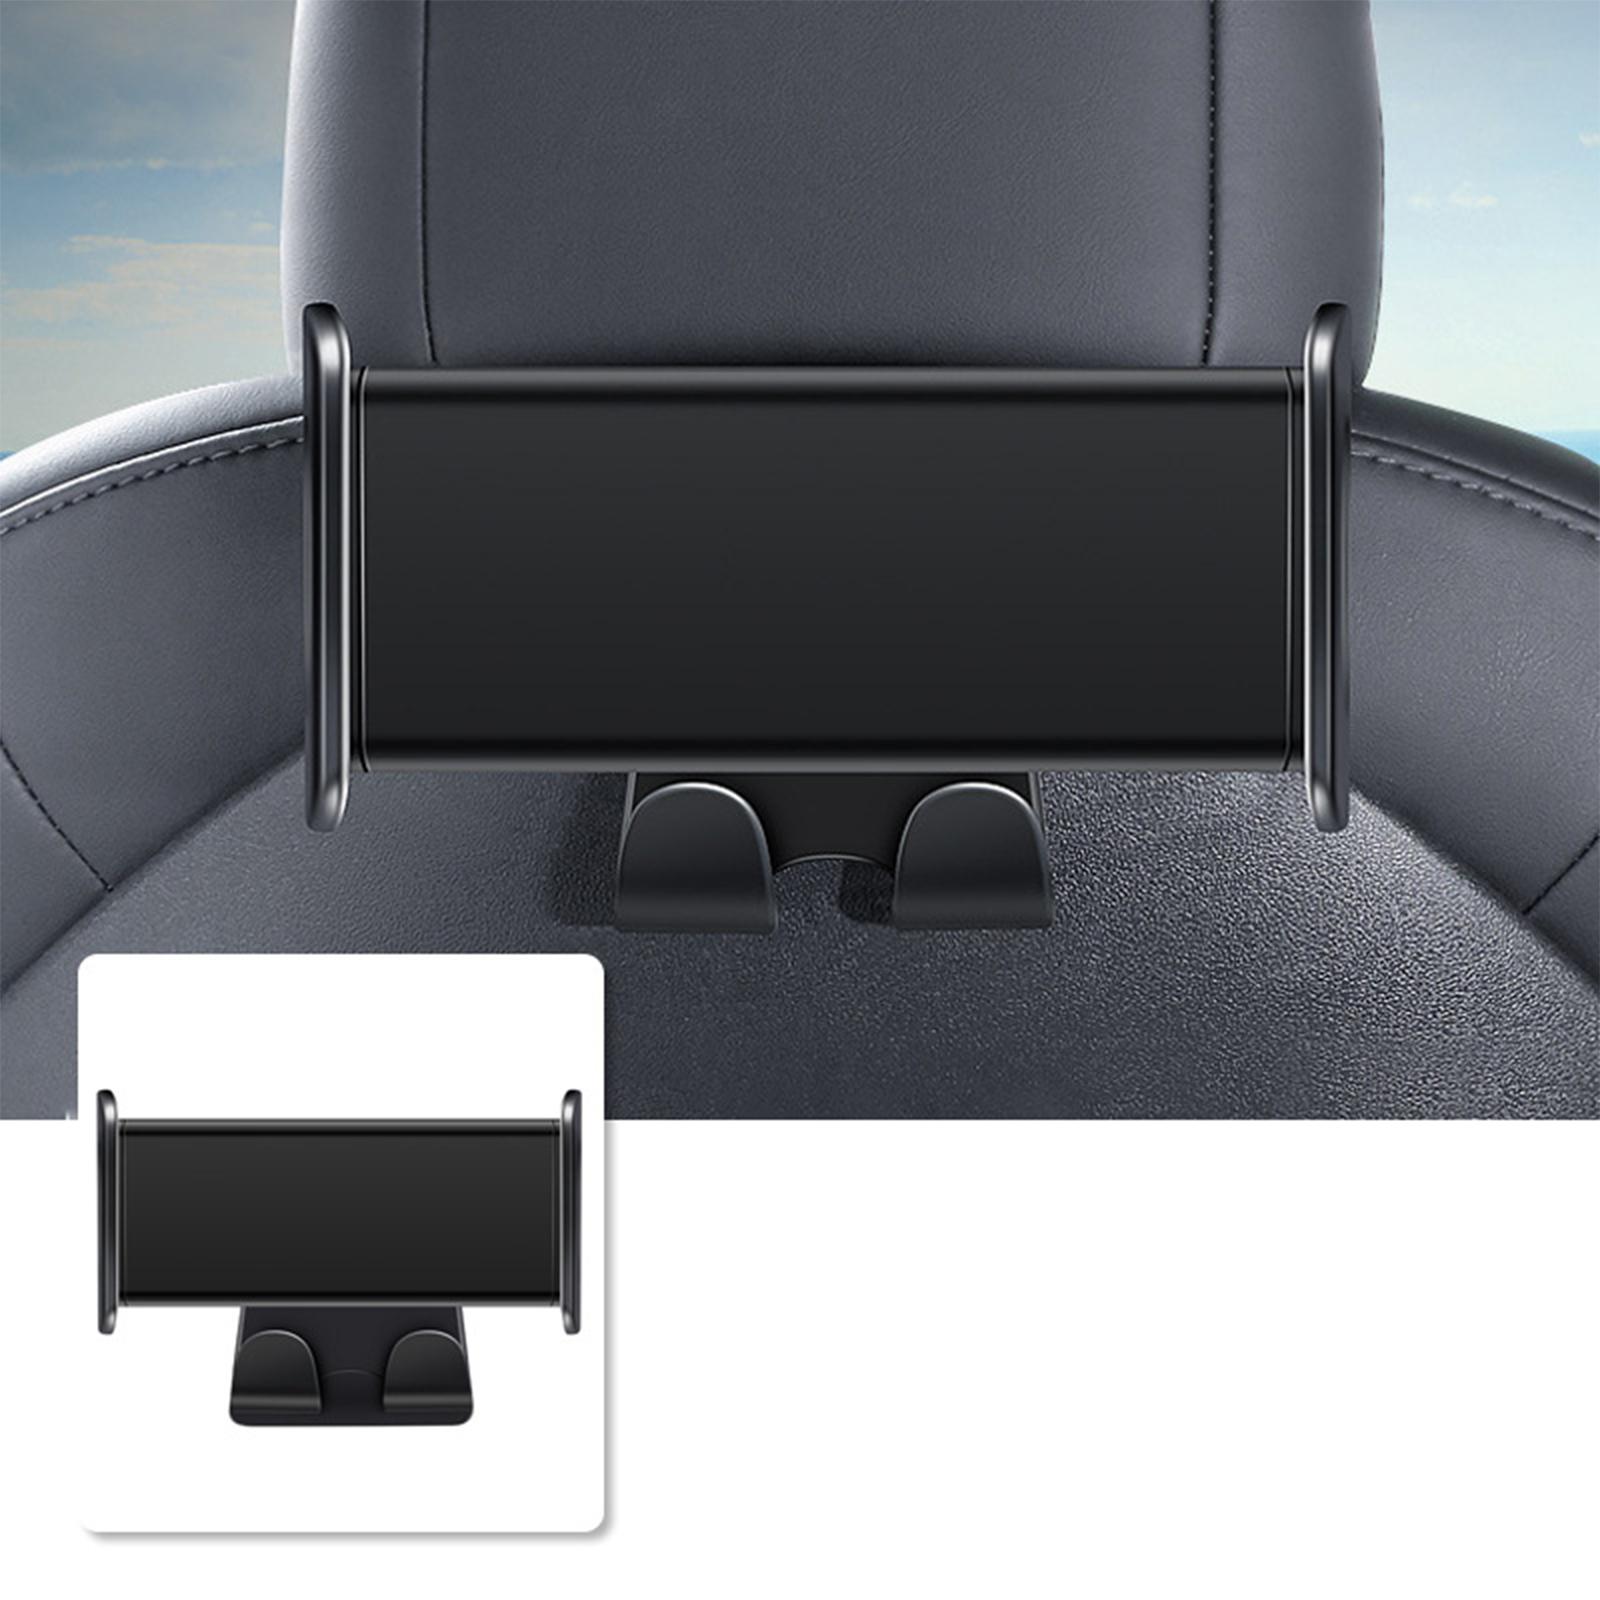 Backseat Headrest Tablet Mount Holder for Tesla Rear Seat Passengers